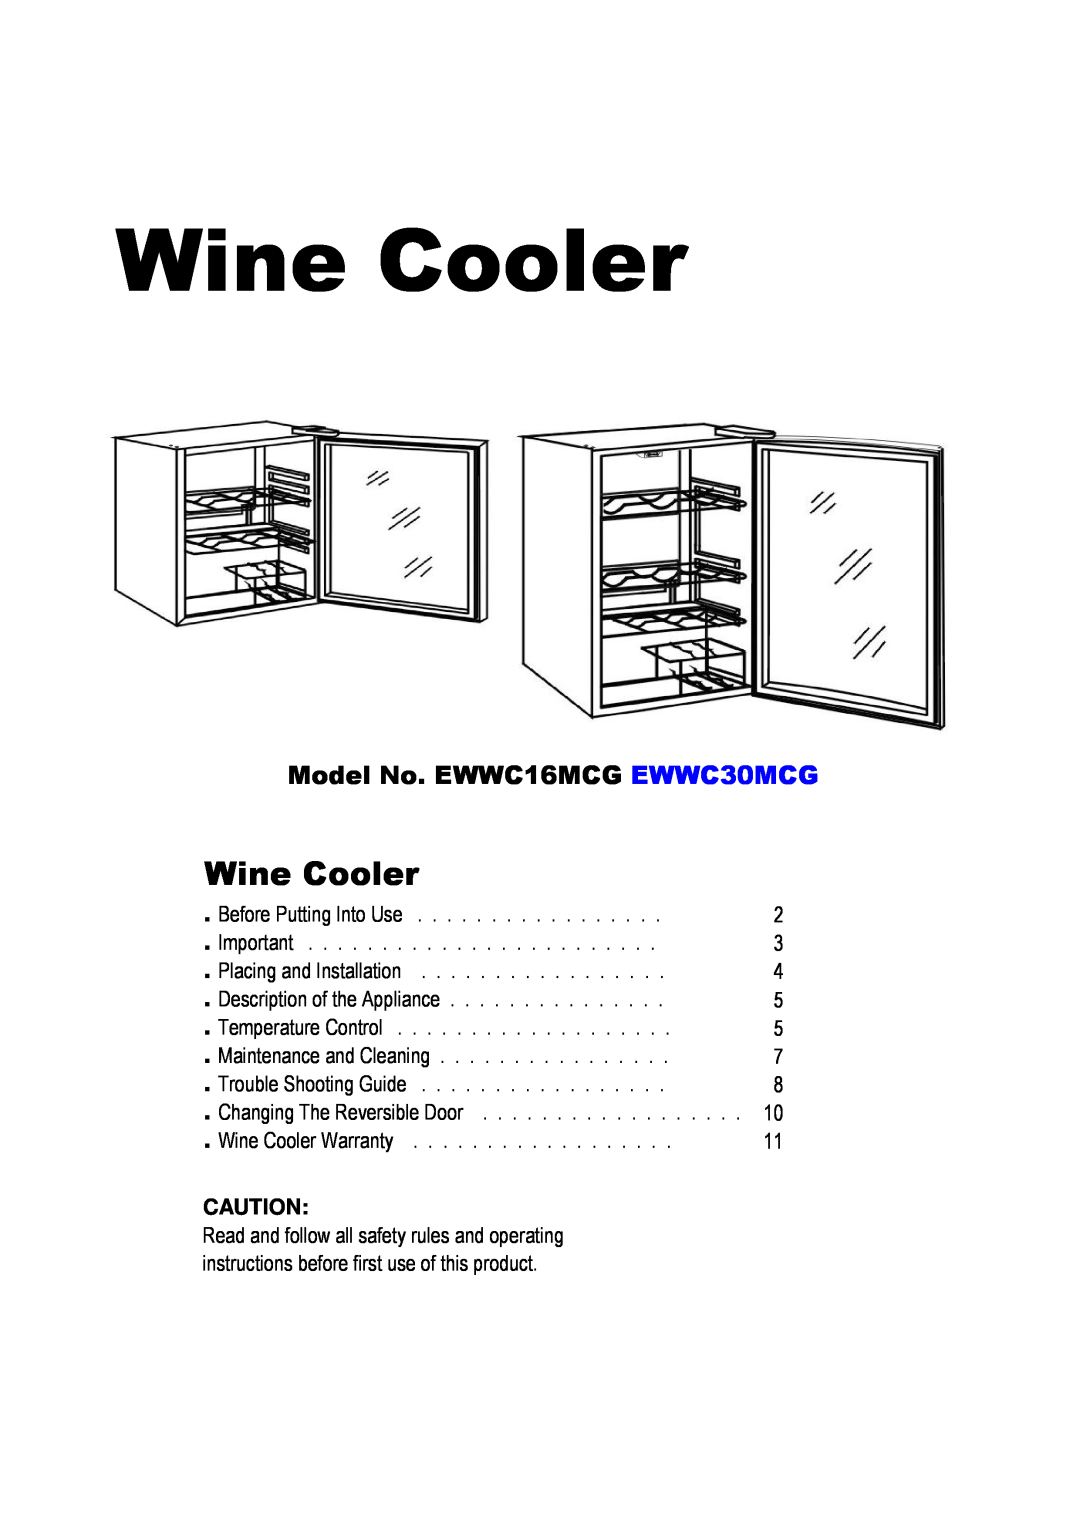 Magic Chef warranty Model No. EWWC16MCG EWWC30MCG, Wine Cooler 